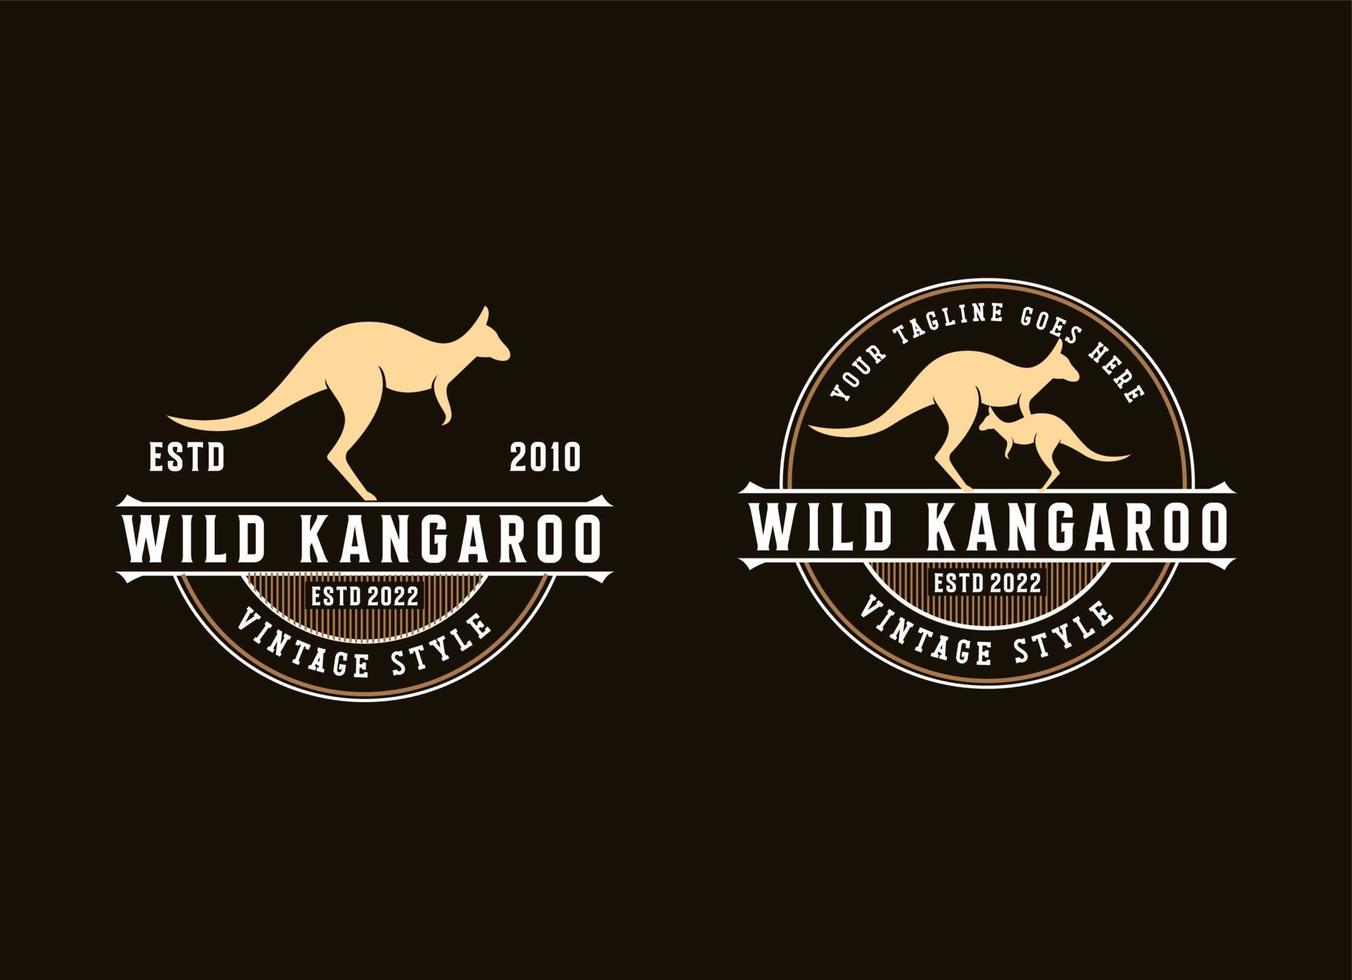 Kangaroo Logo Vector Design. Australian animal kangaroo.